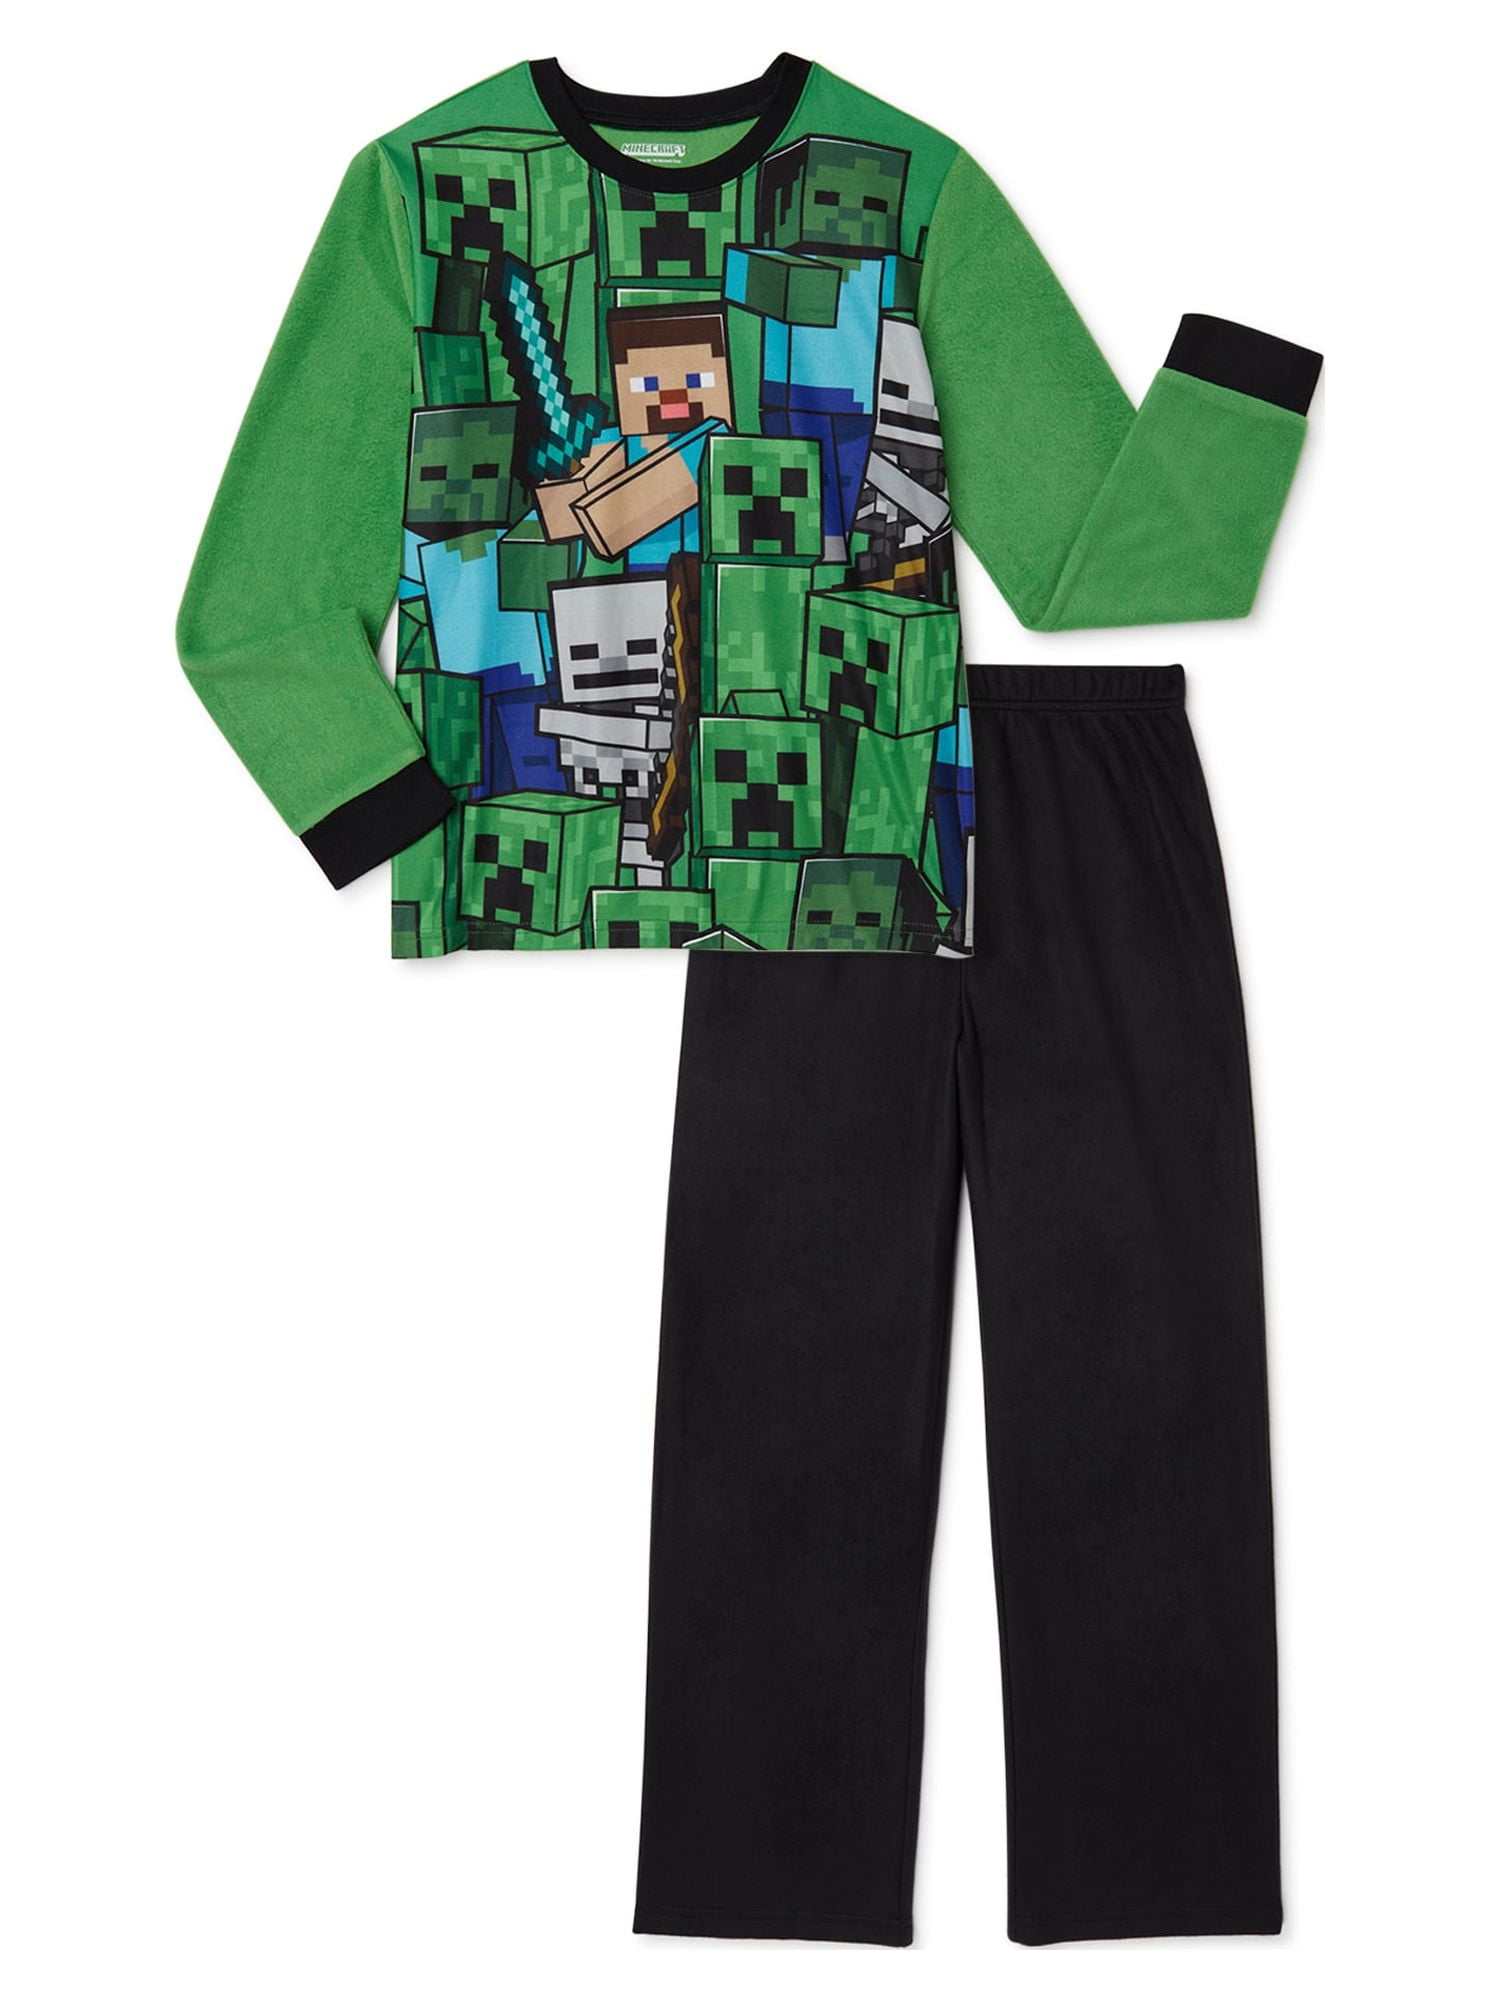 Minecraft Boys Pajamas Short Sleeve Kids PJs 2pc Set